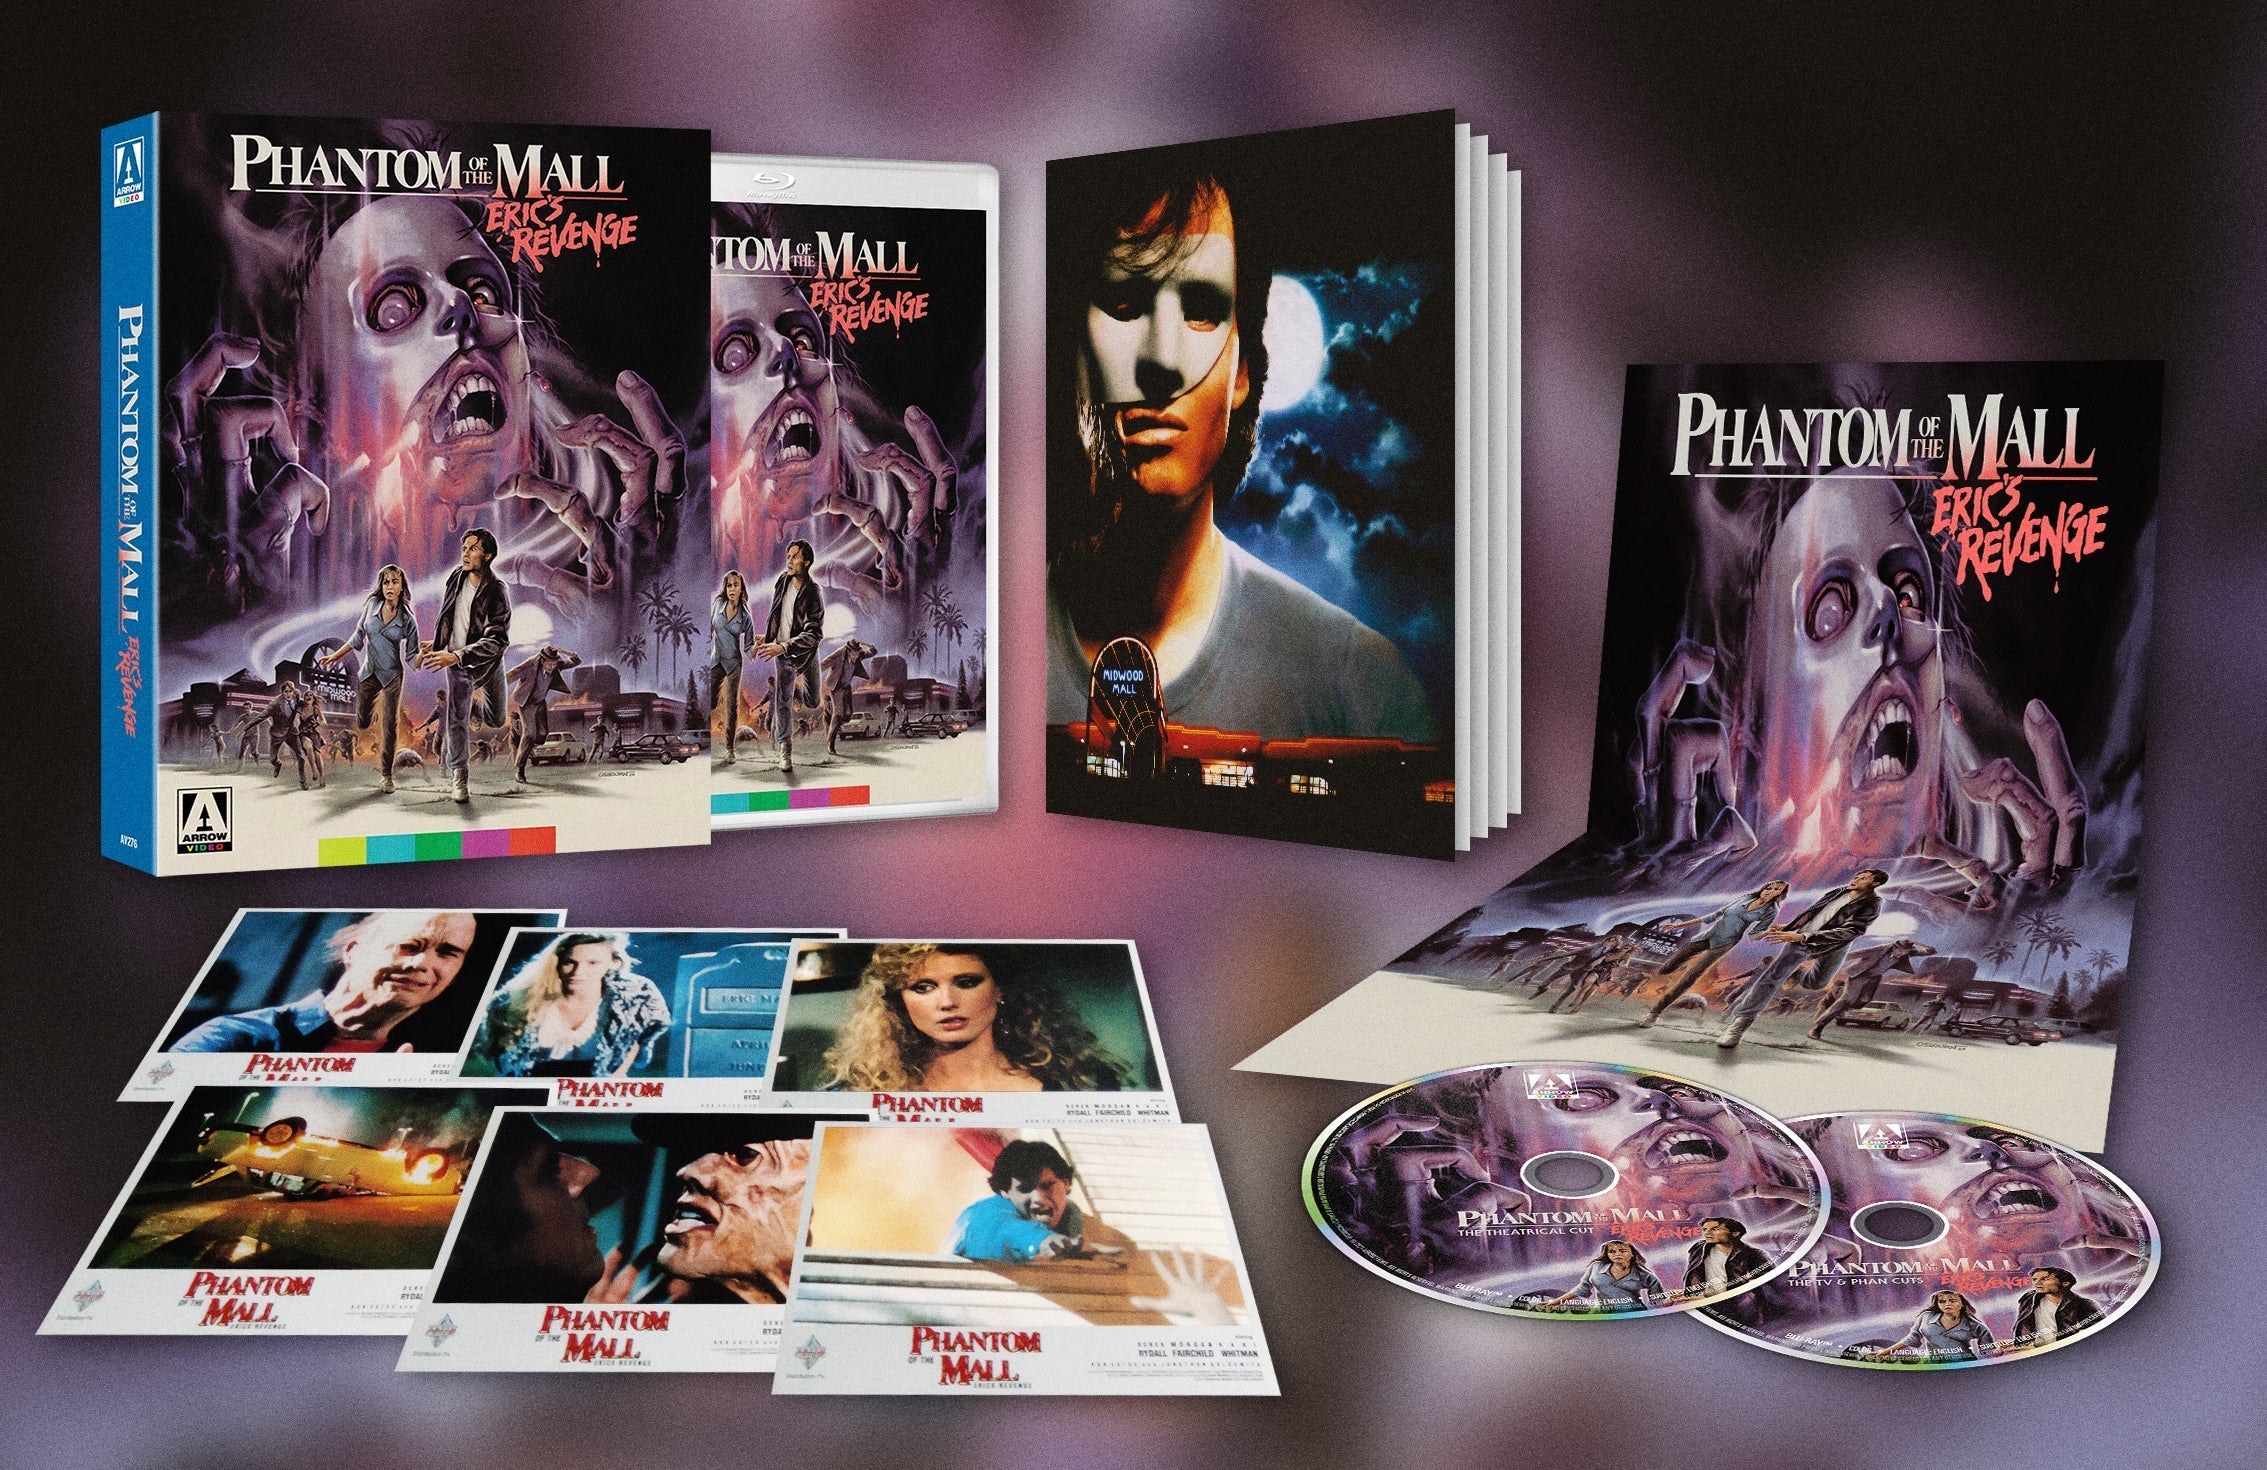 Phantom Of The Mall: Erics Revenge (Limited Edition) Blu-Ray Blu-Ray